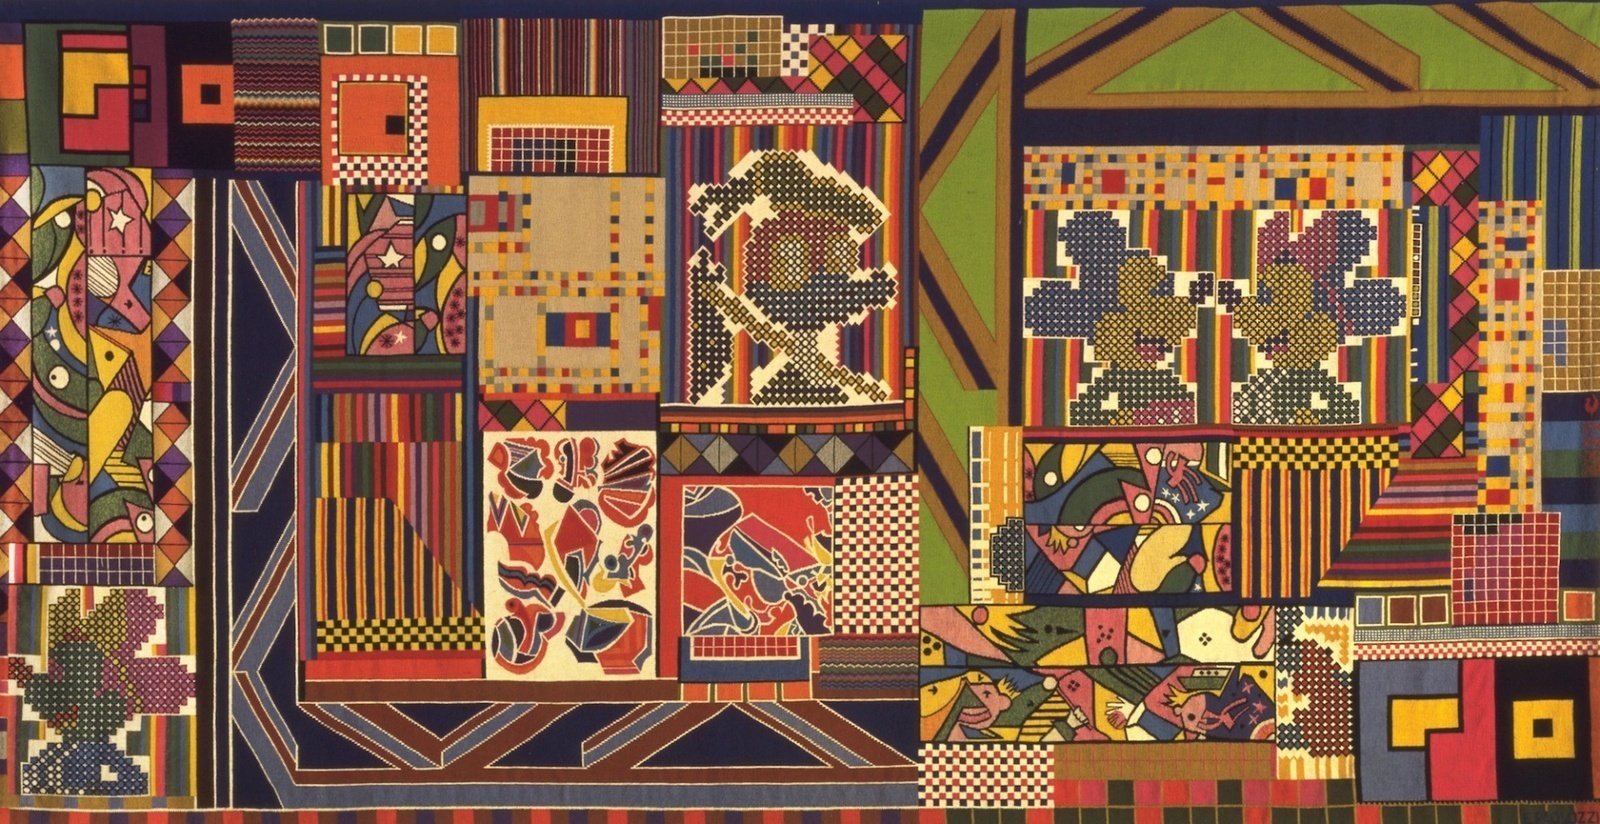 Eduardo&nbsp;Luigi Paolozzi, The Whitworth Tapestry, 1967Wool, linen, and terylene&copy; Trustees of the Paolozzi Foundation